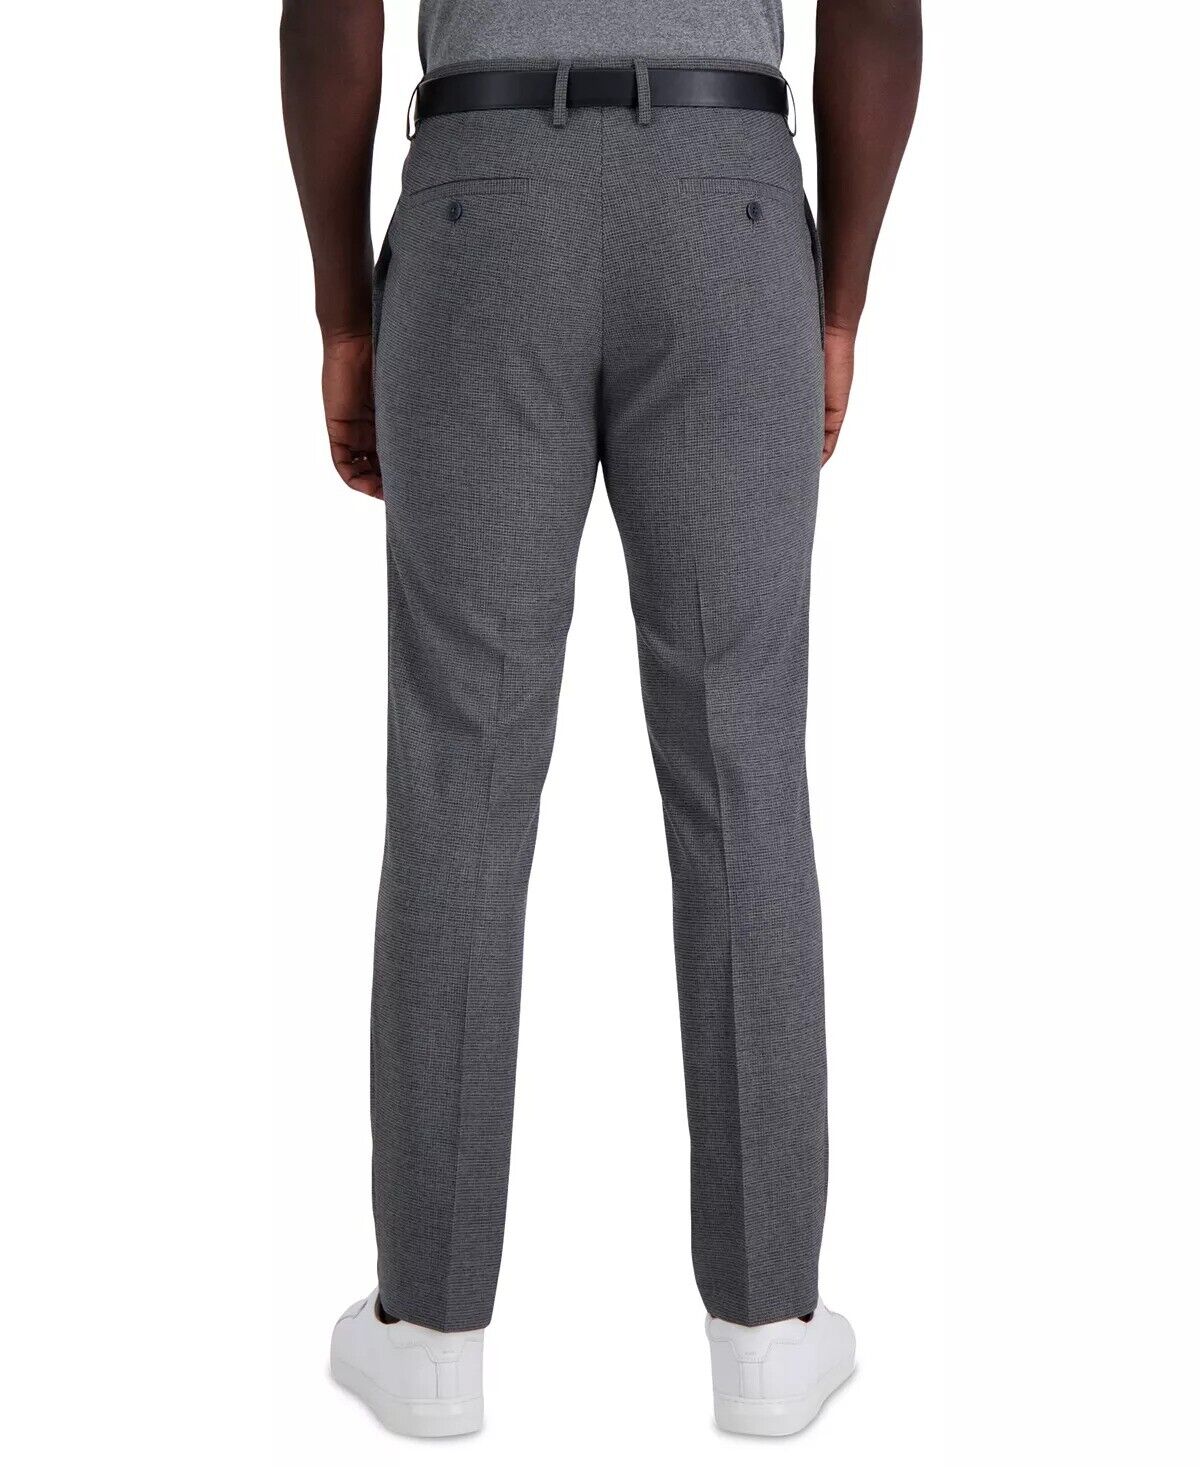 KENNETH COLE Men's Slim-Fit Stretch Dress Pants 32 x 32 Grey Windowpane